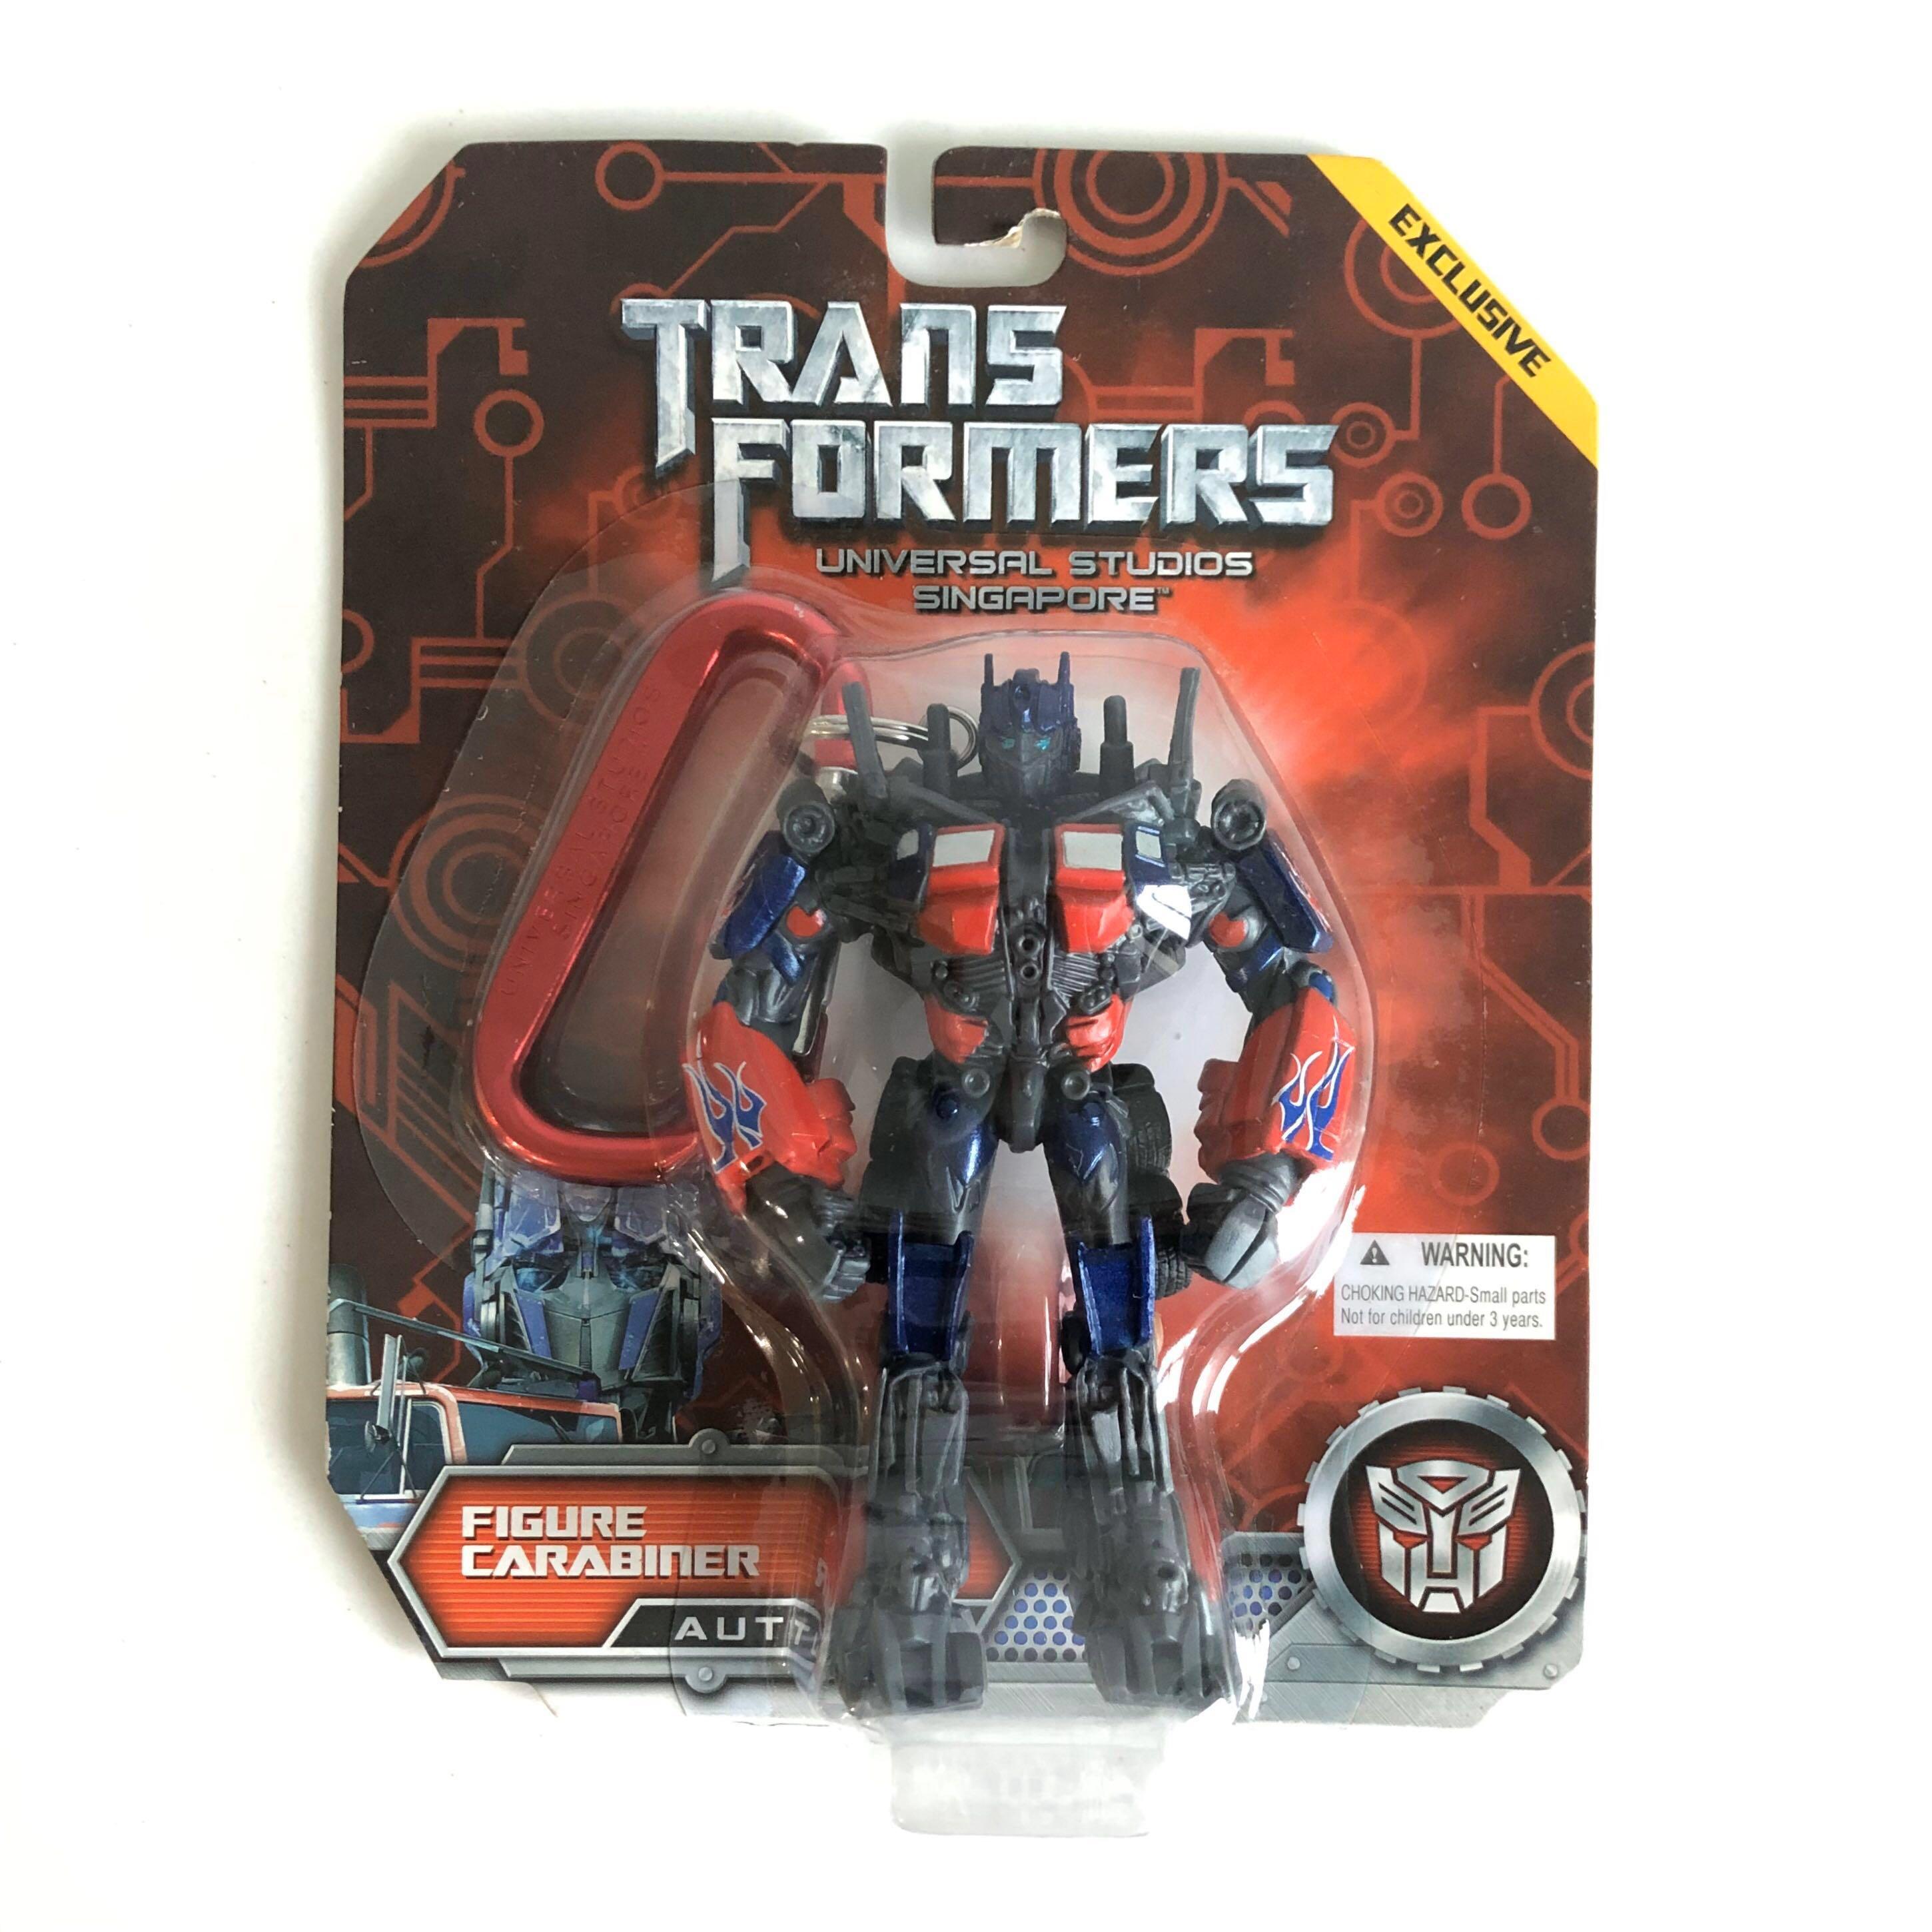 Transformers Universal Studios Optimus Prime Figure Carabiner RARE Unmasked Ver 